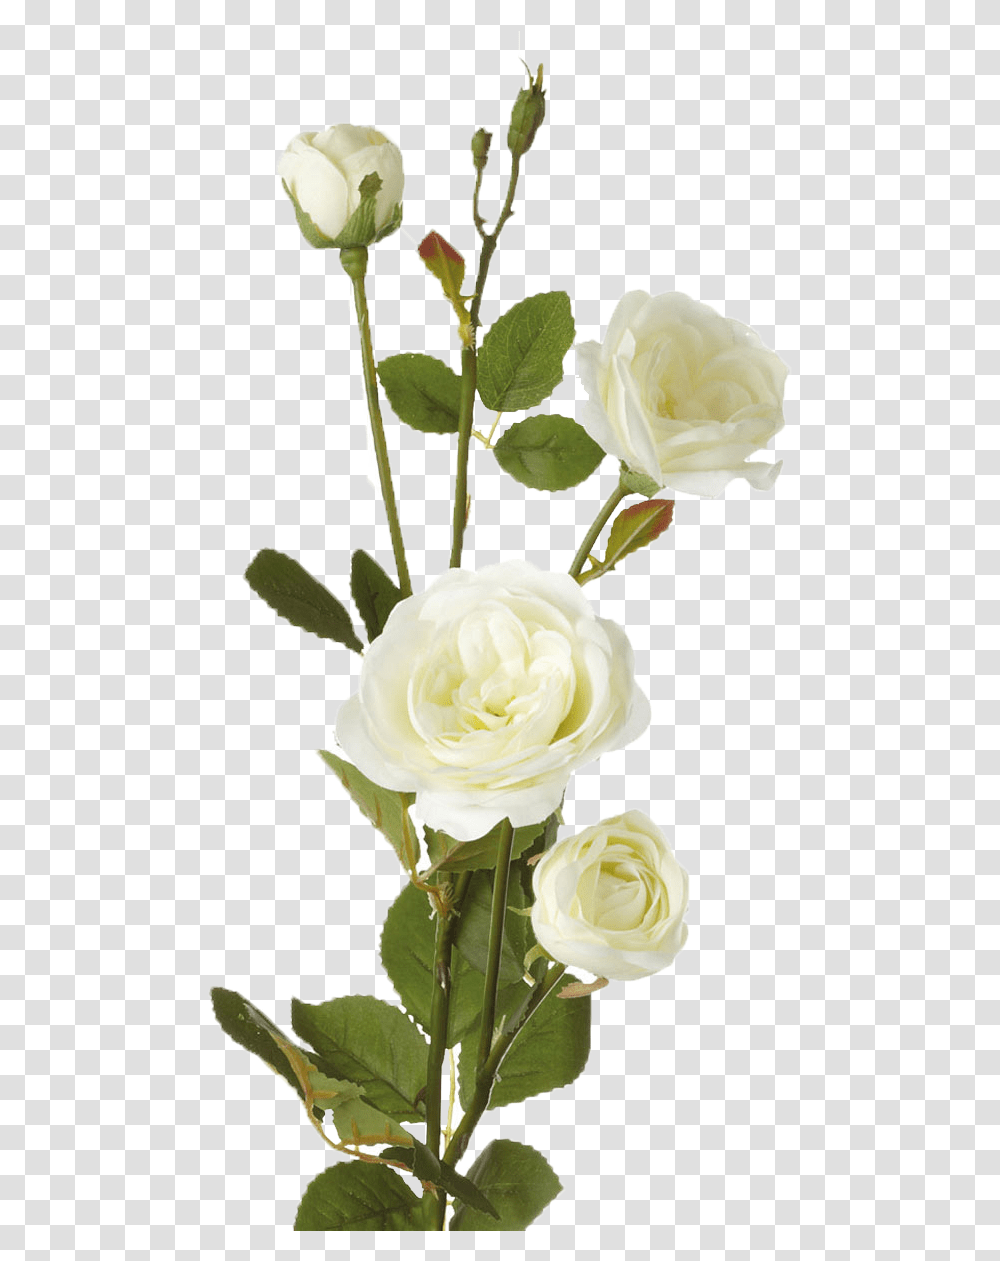 White Roses Image Single White Rose Flower, Plant, Blossom, Petal, Flower Arrangement Transparent Png